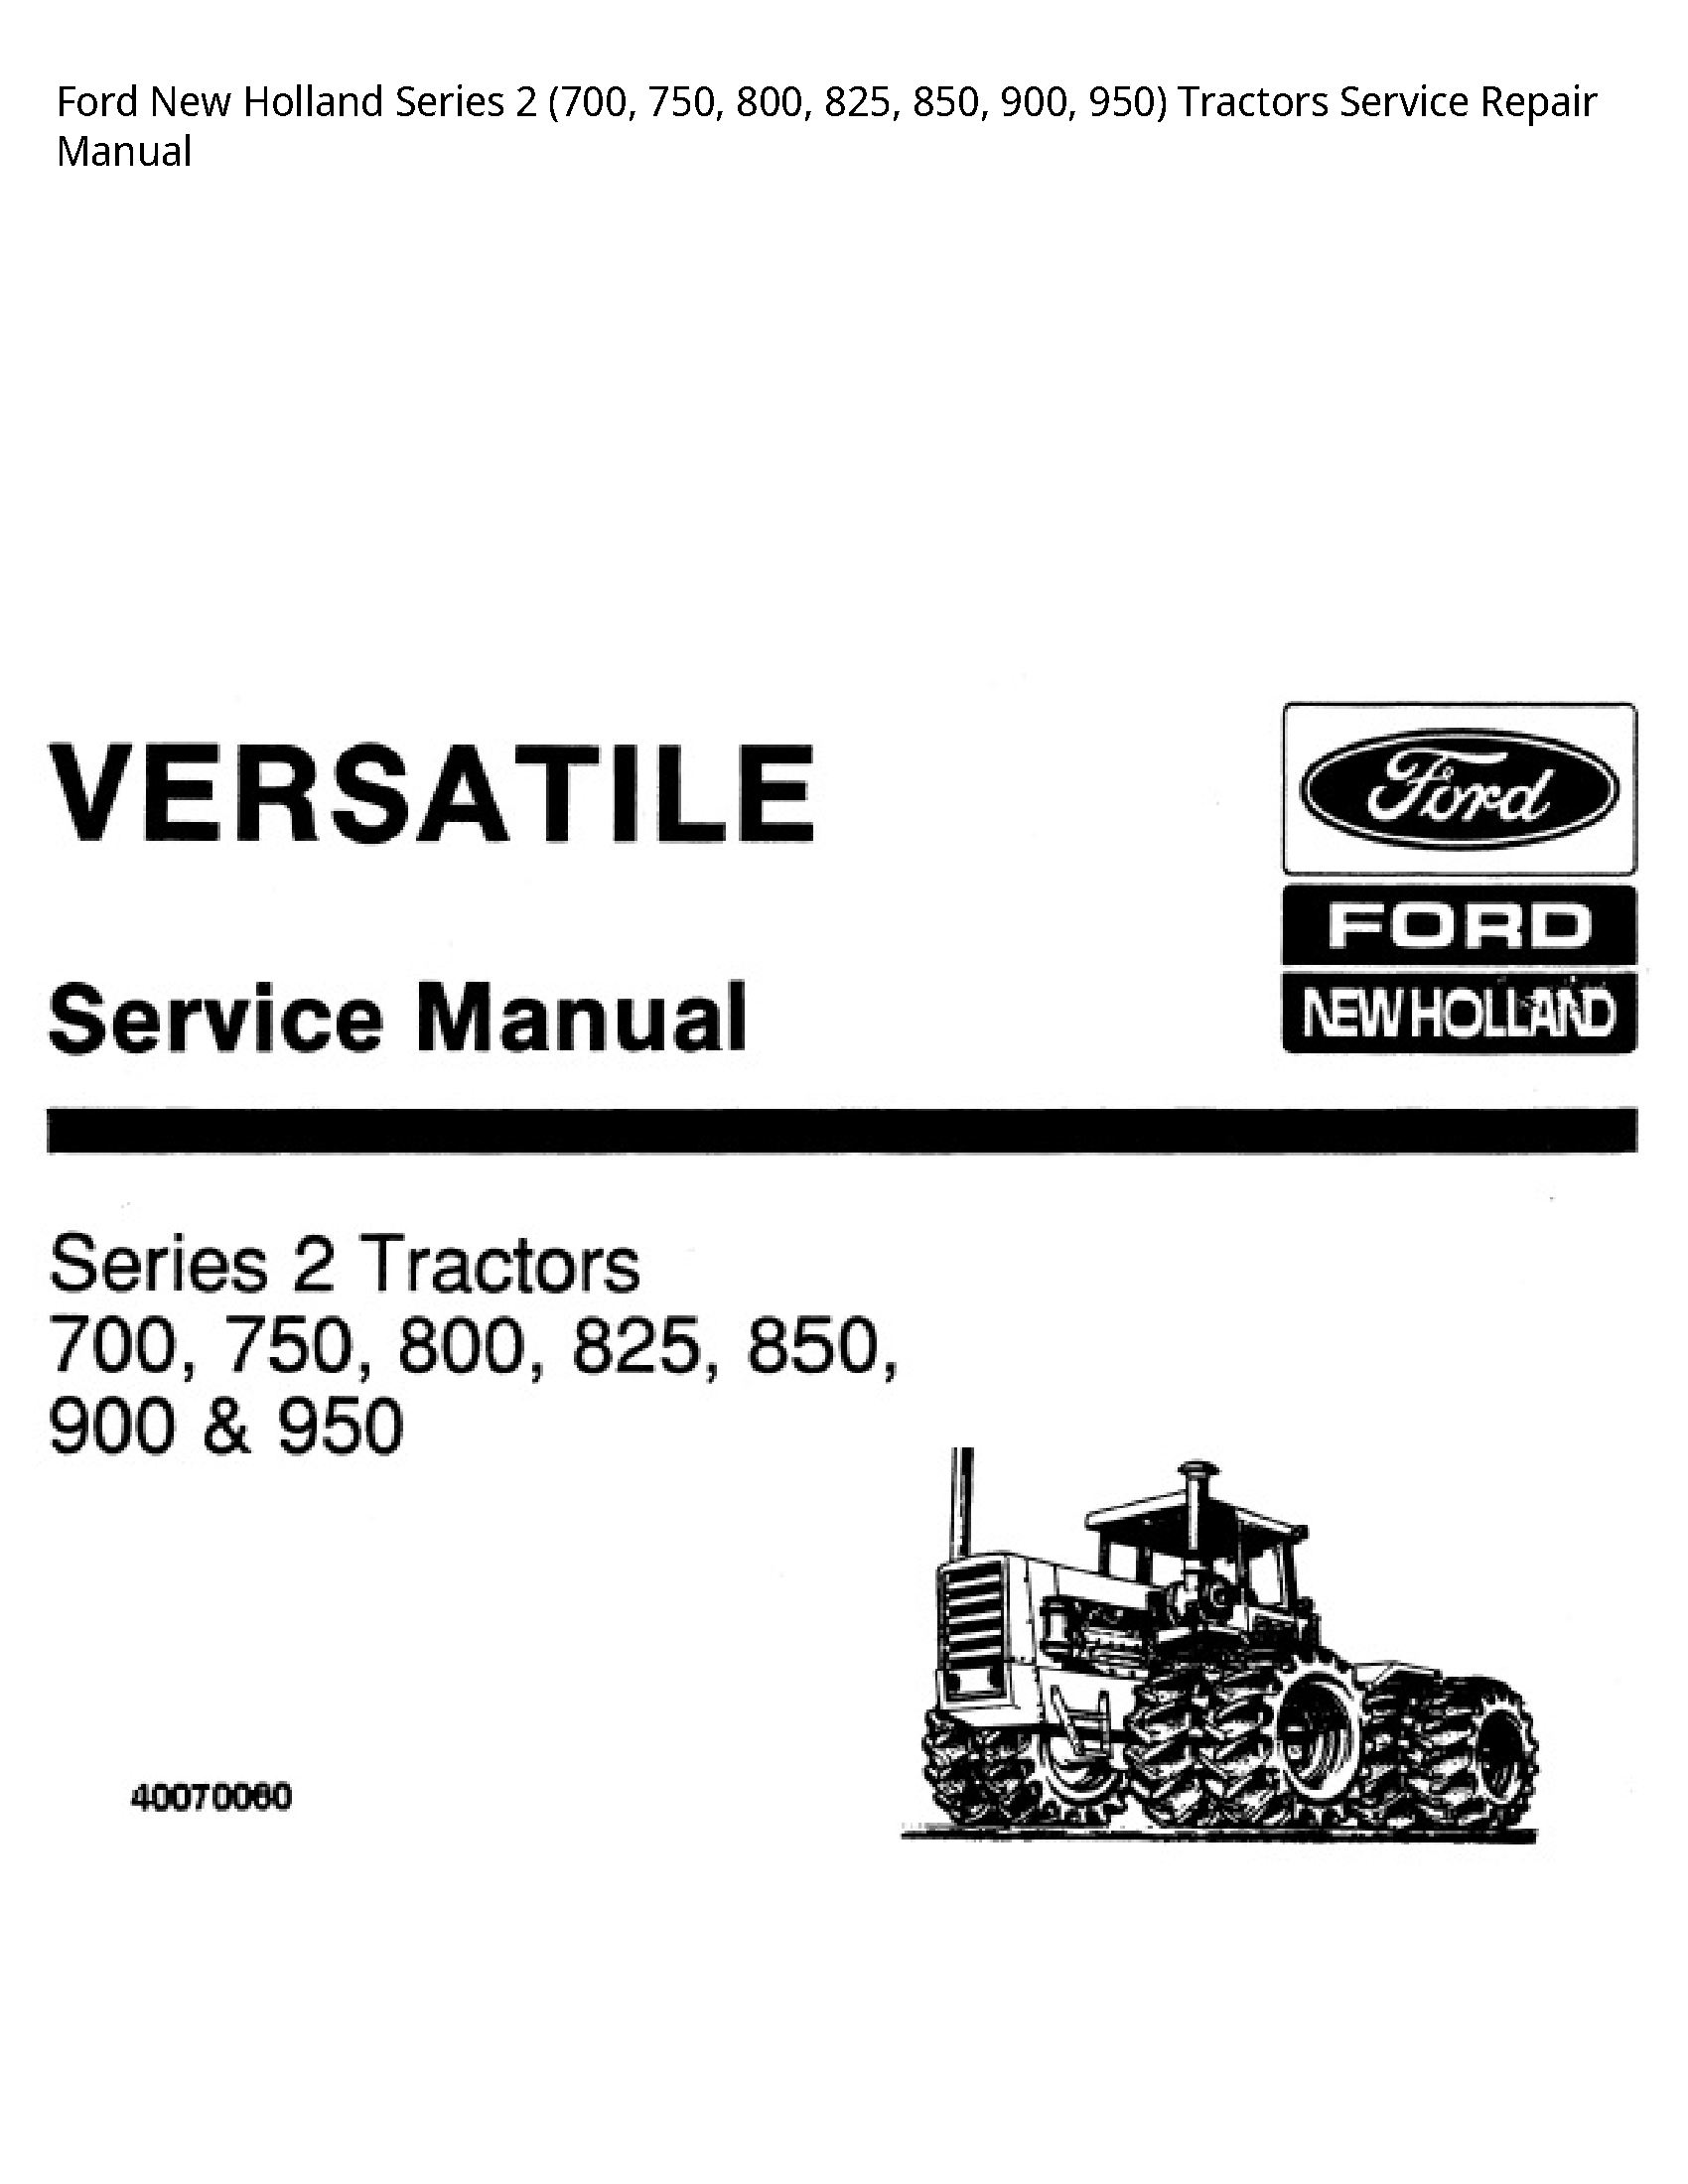  2 Series Tractors manual